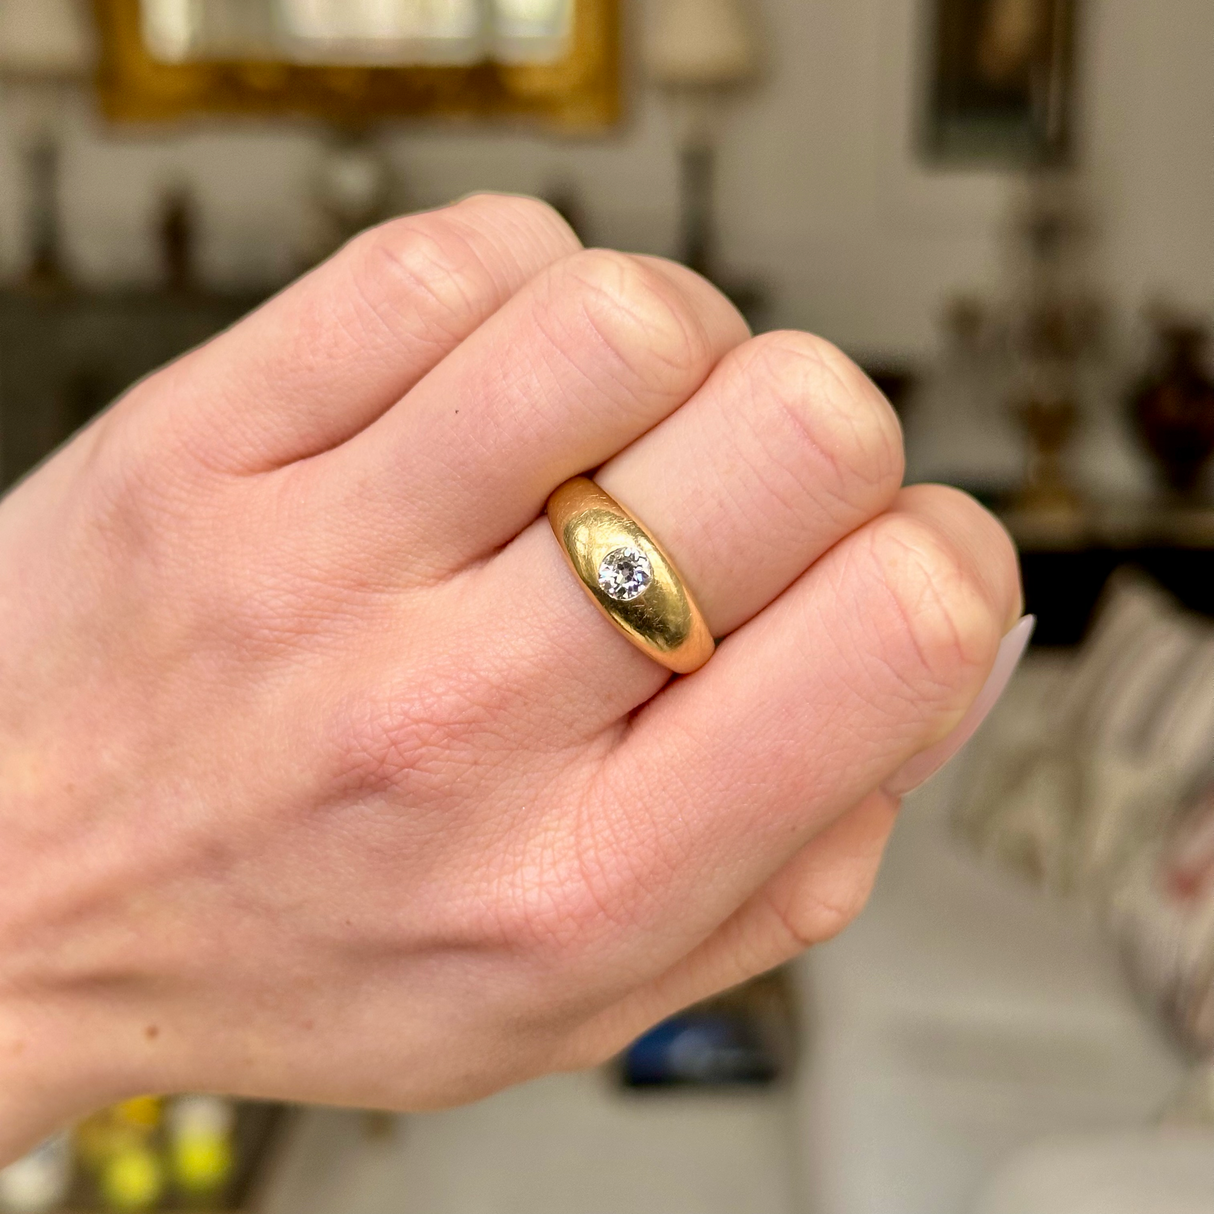 Antique, Single-Stone Diamond Gypsy Ring, worn on closed hand.